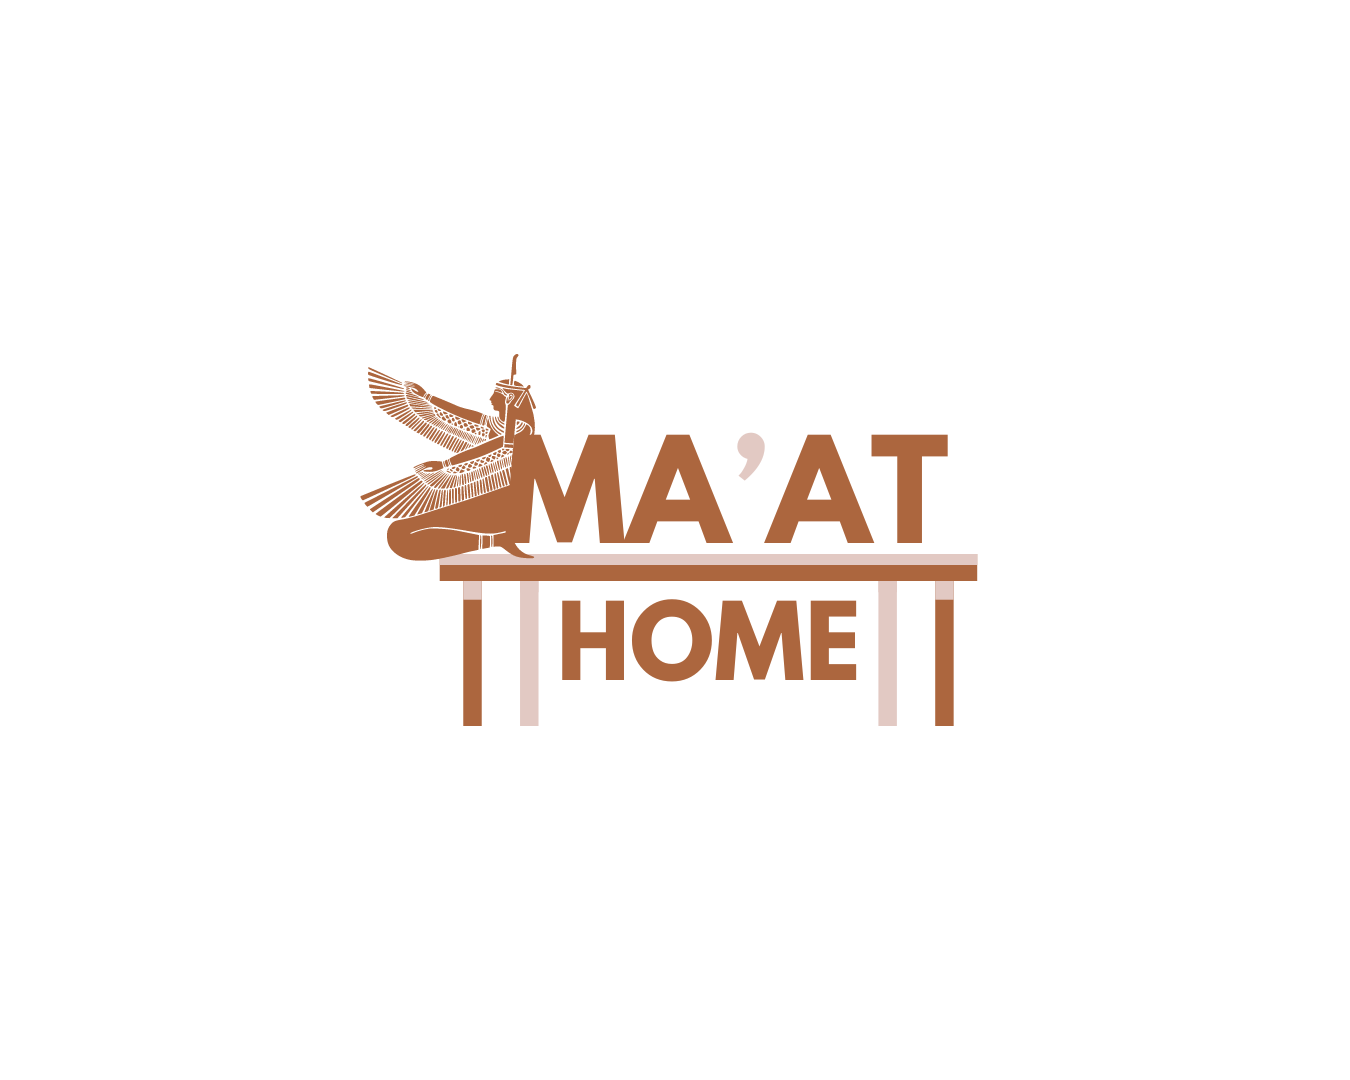 Ma’at Home Logo.png